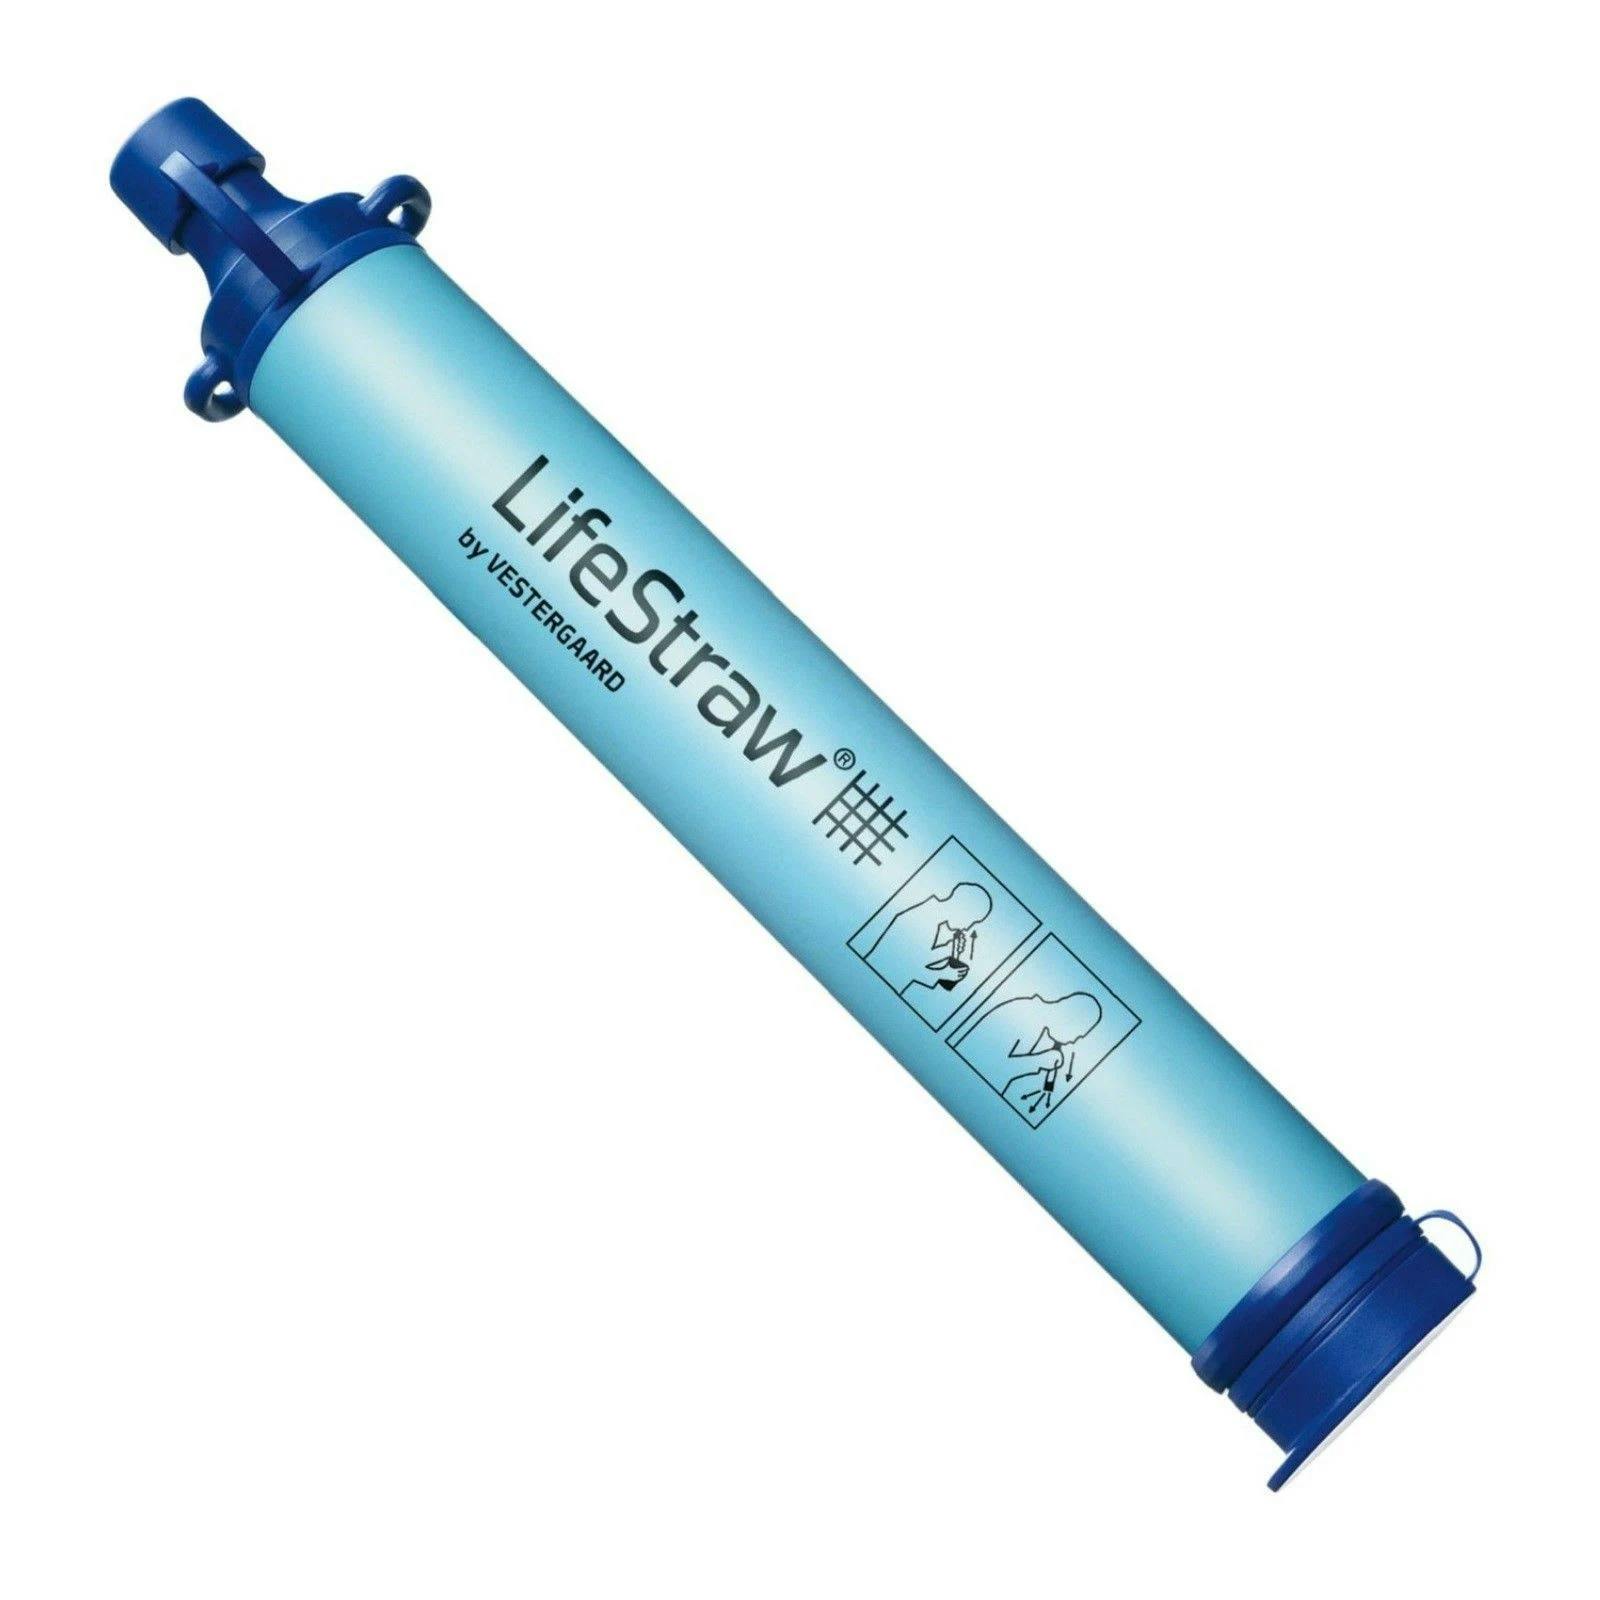 LifeStraw Eartheasy LifeStaw Personal Water Filter